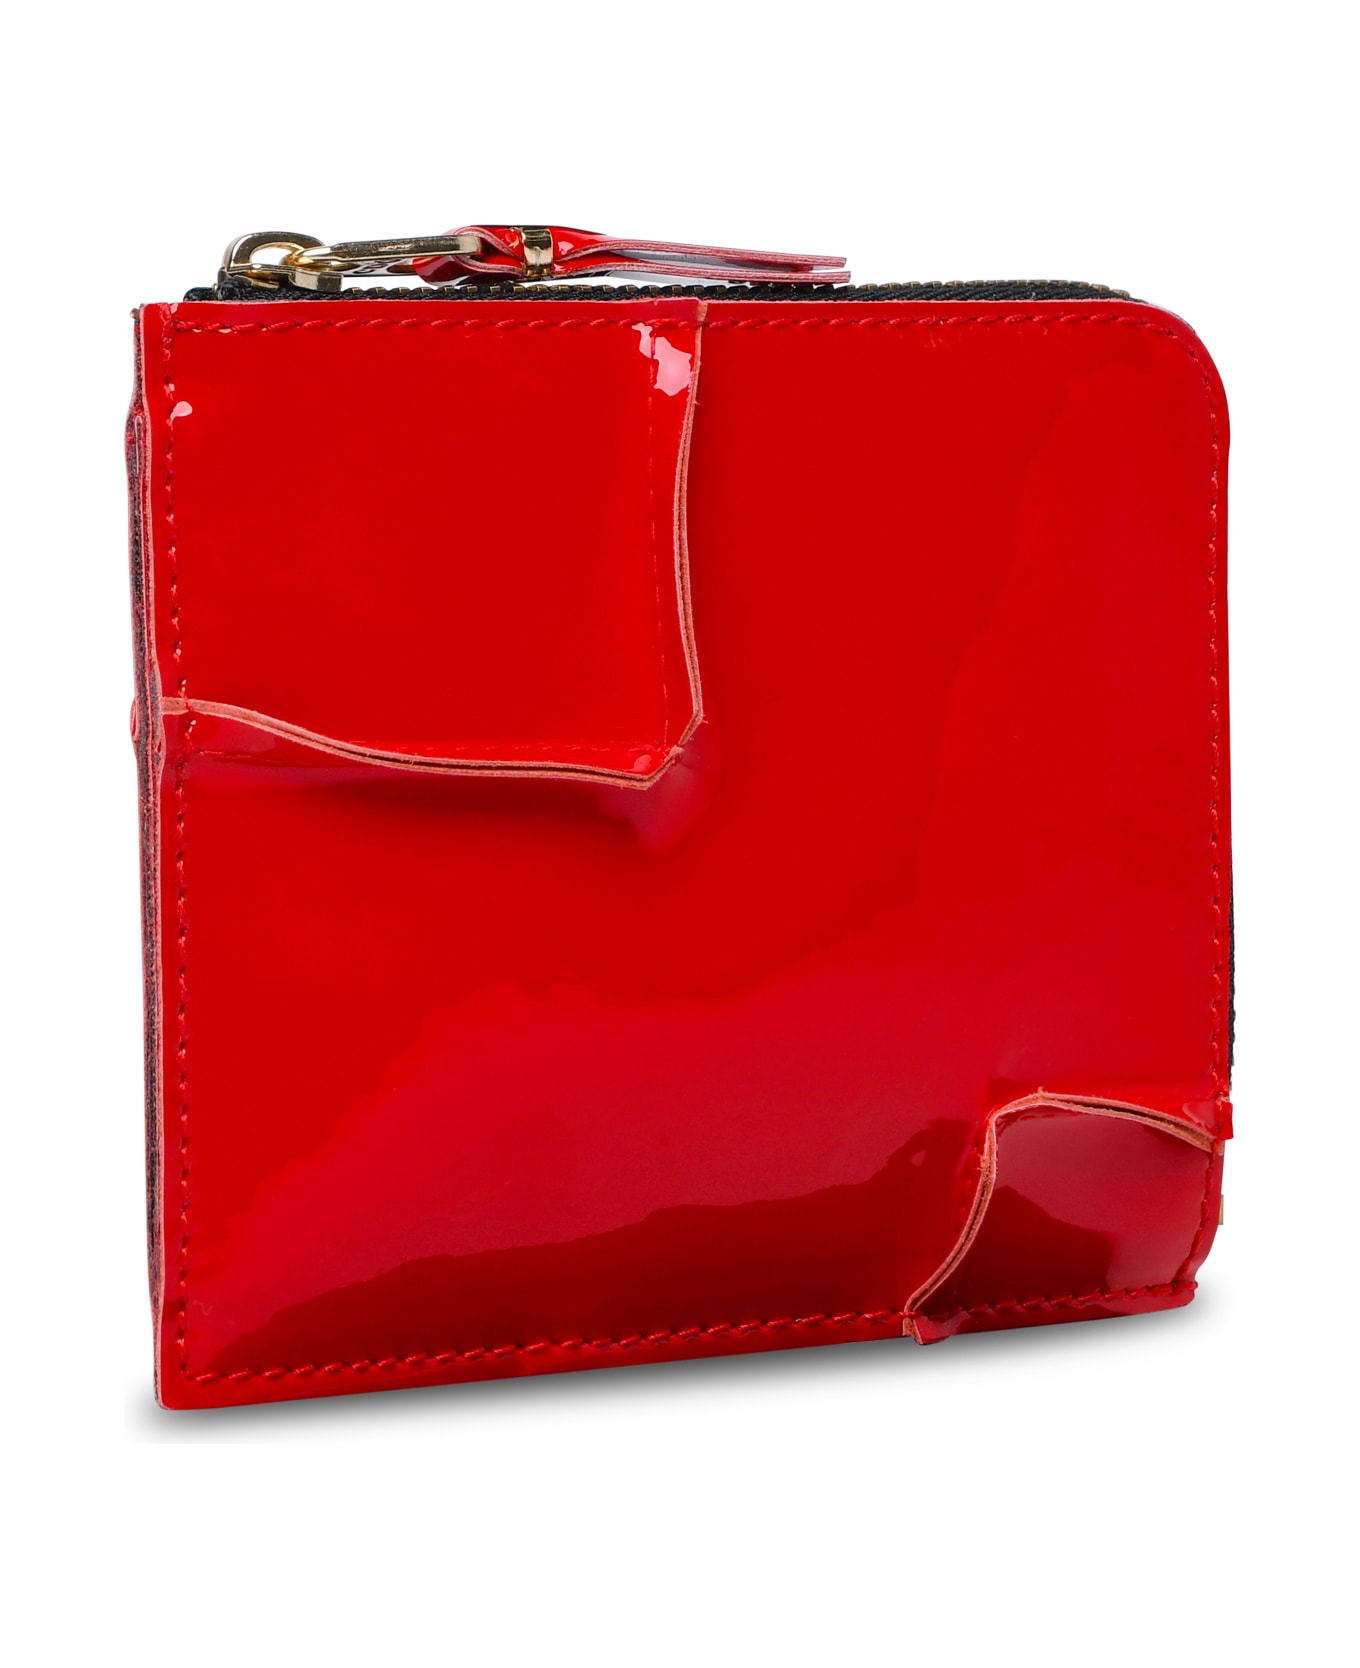 Comme des Garçons Wallet 'medley' Red Leather Wallet - Red 財布